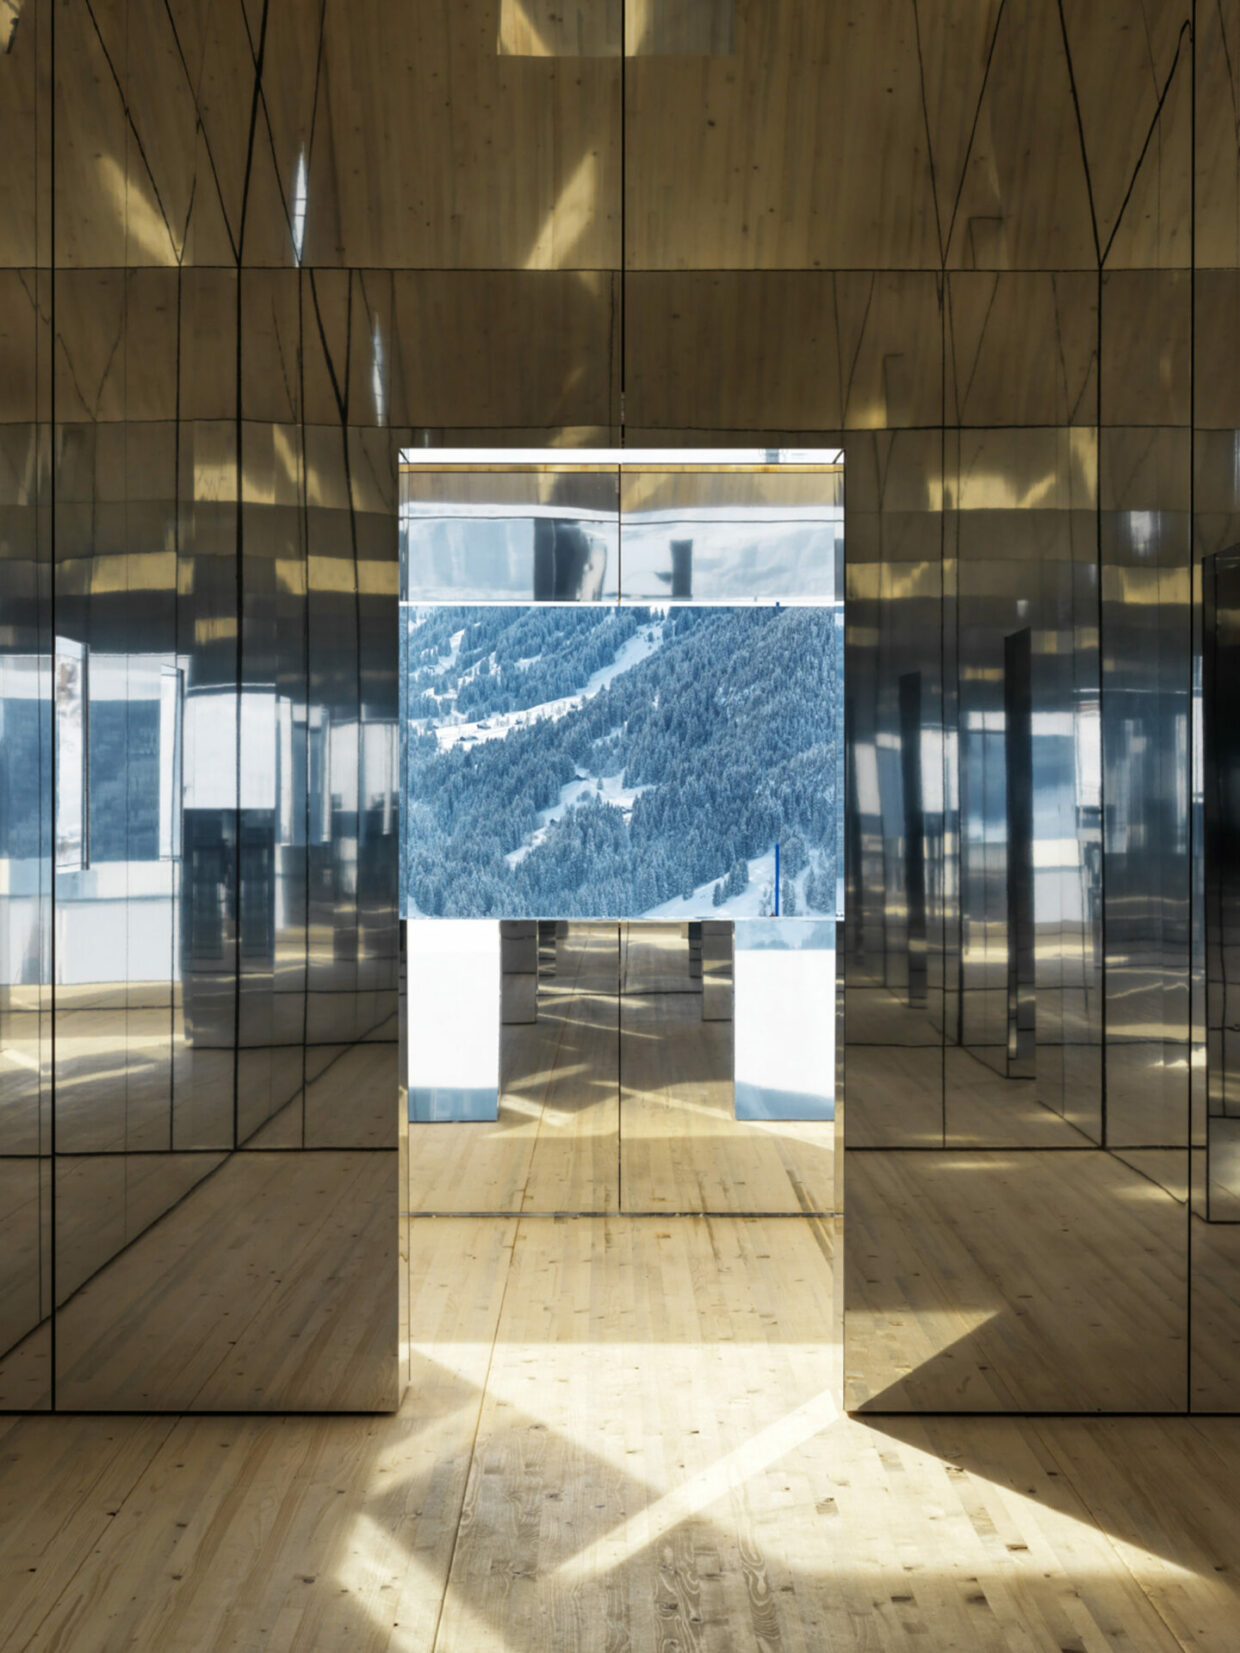 Doug Aitken’s mirrored Mirage house installed in Swiss alps | 5